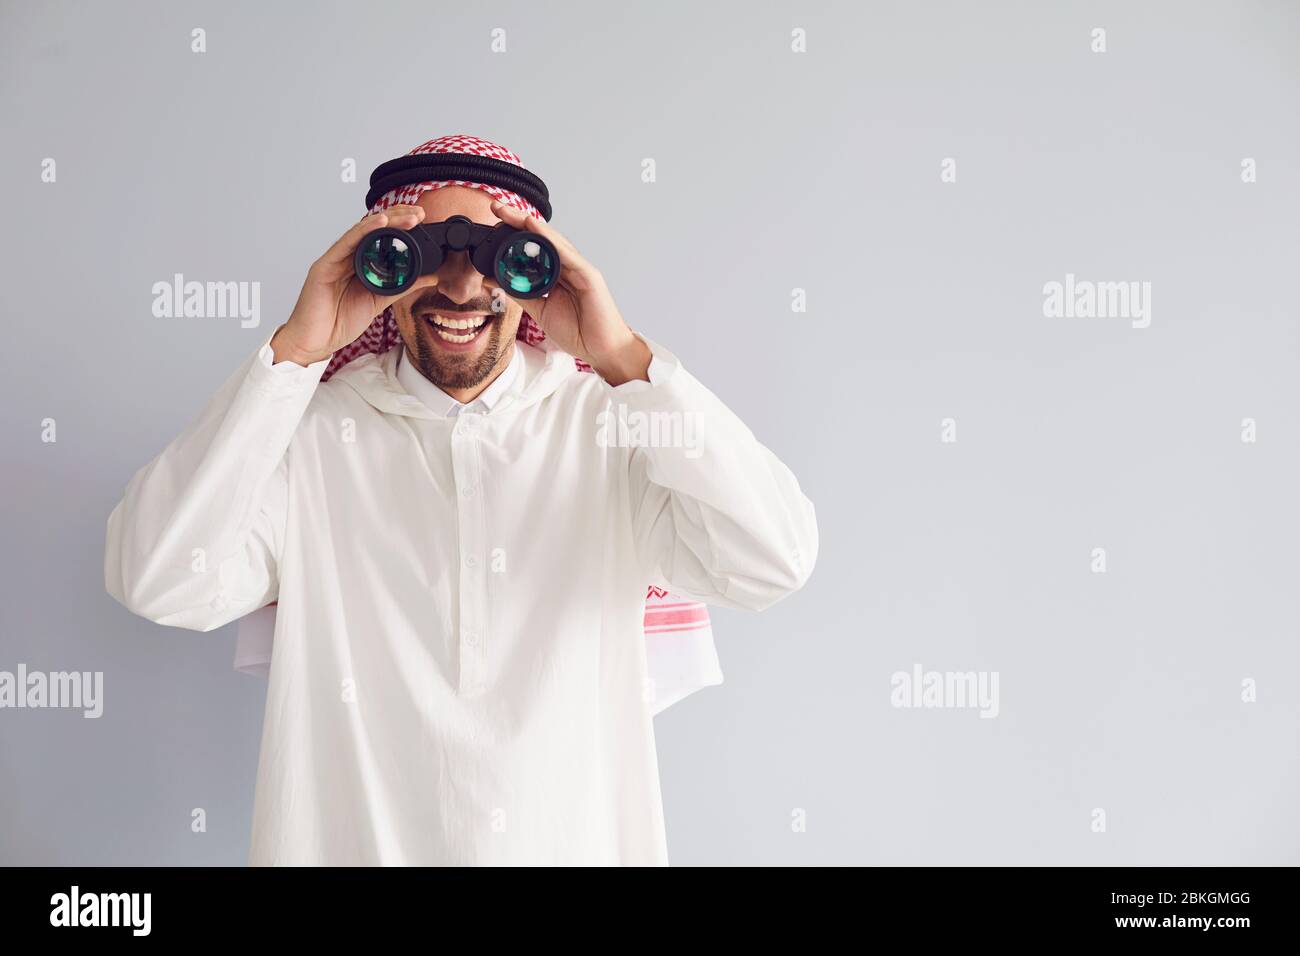 Arab man looking through binoculars smiling on a gray background. Stock Photo